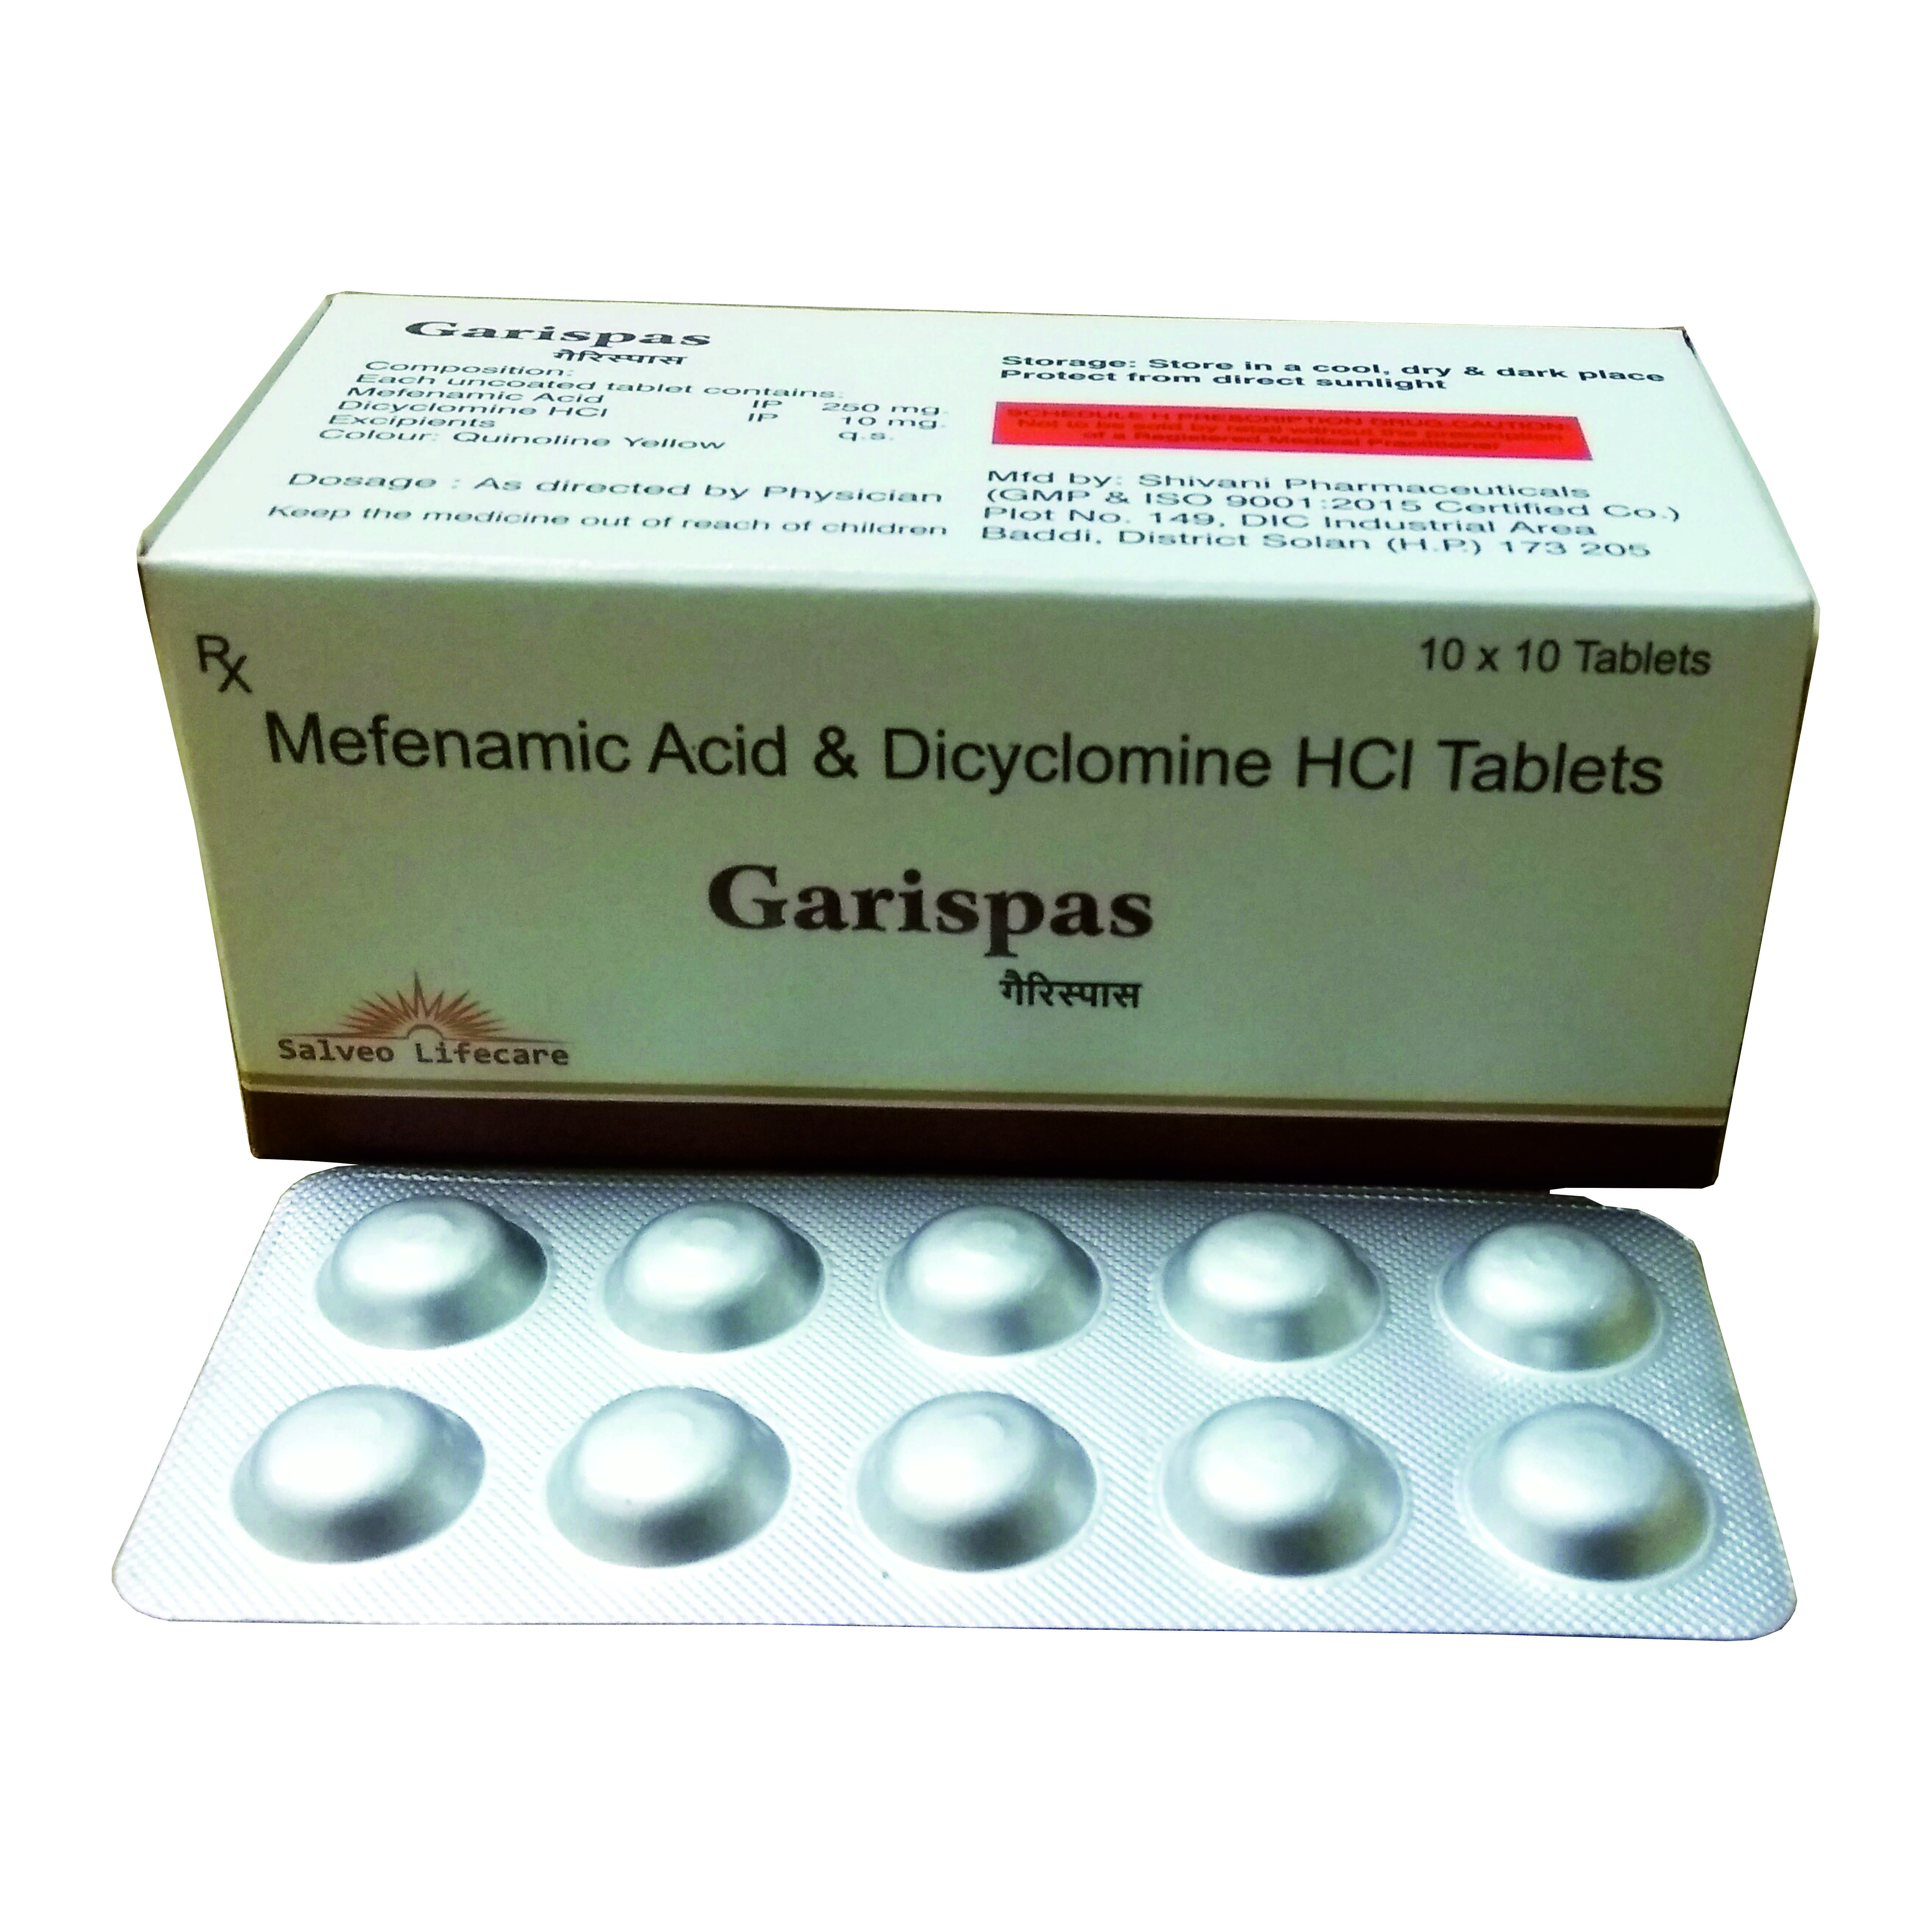 mefenemic acid 250 mg, dicyclomin hcl 10 mg